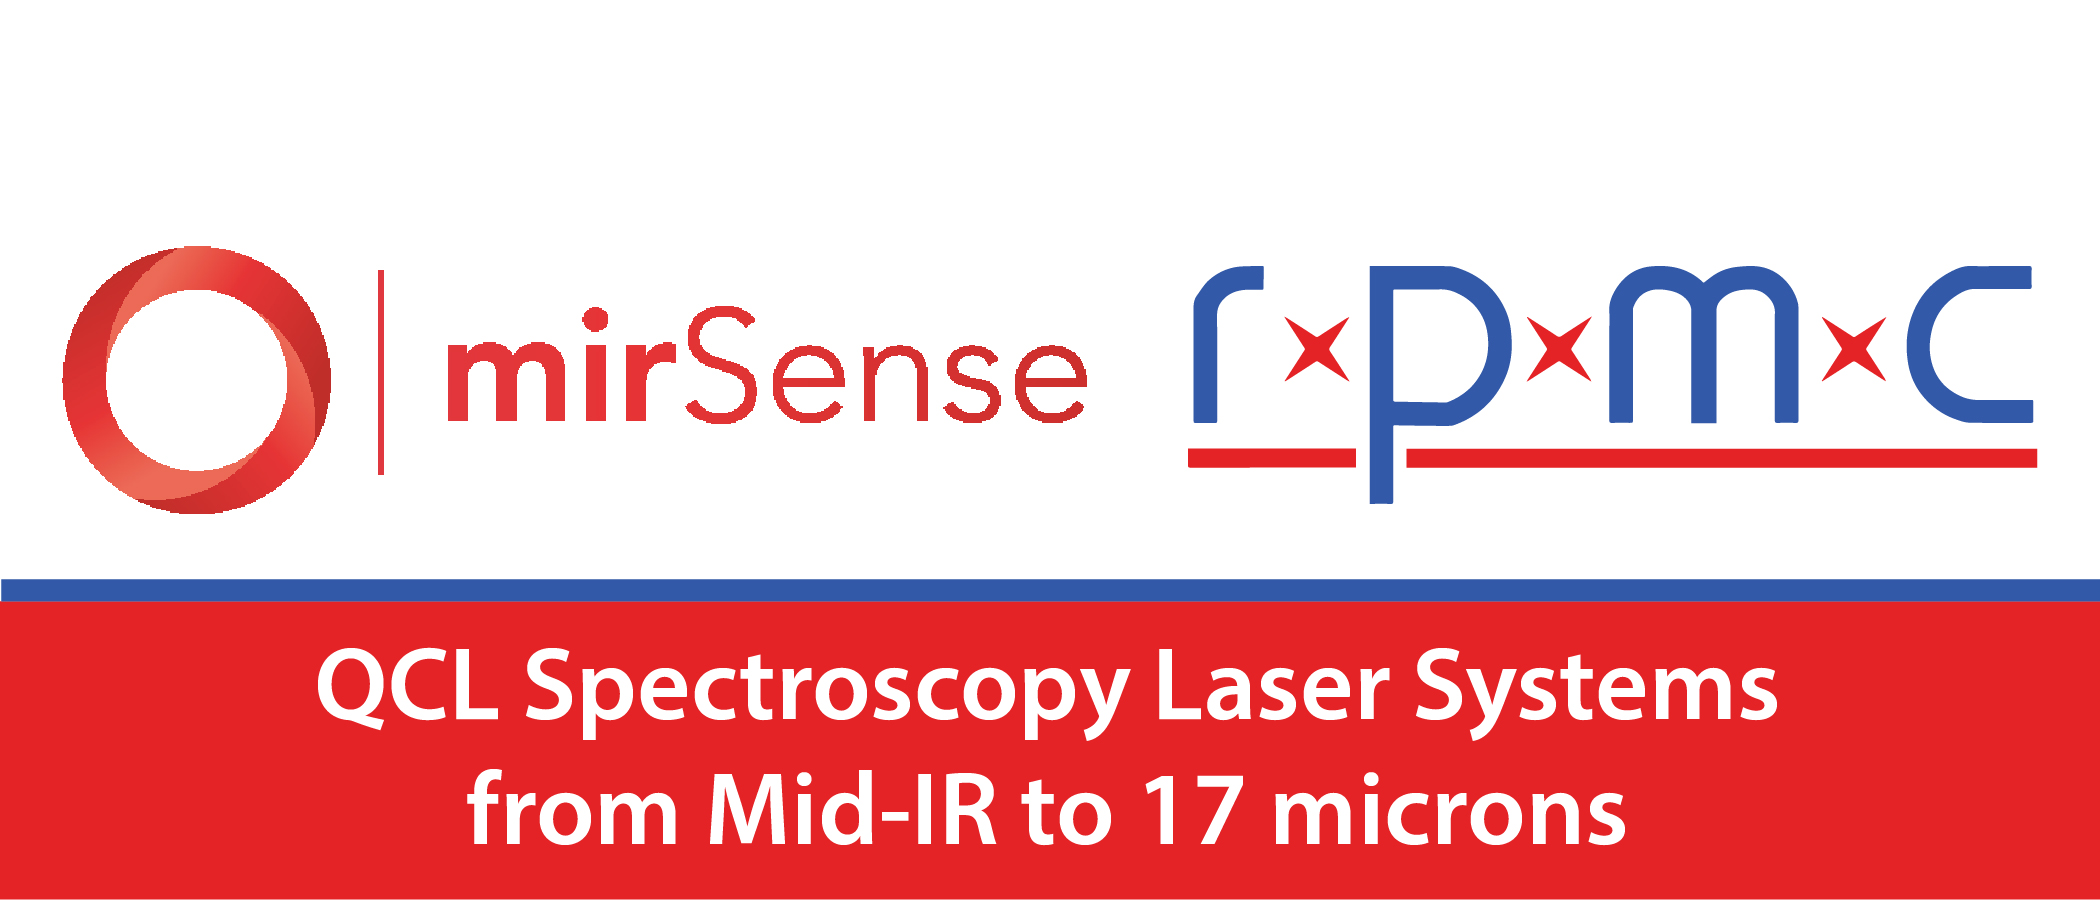 RPMC Lasers Inc. &amp; mirSense